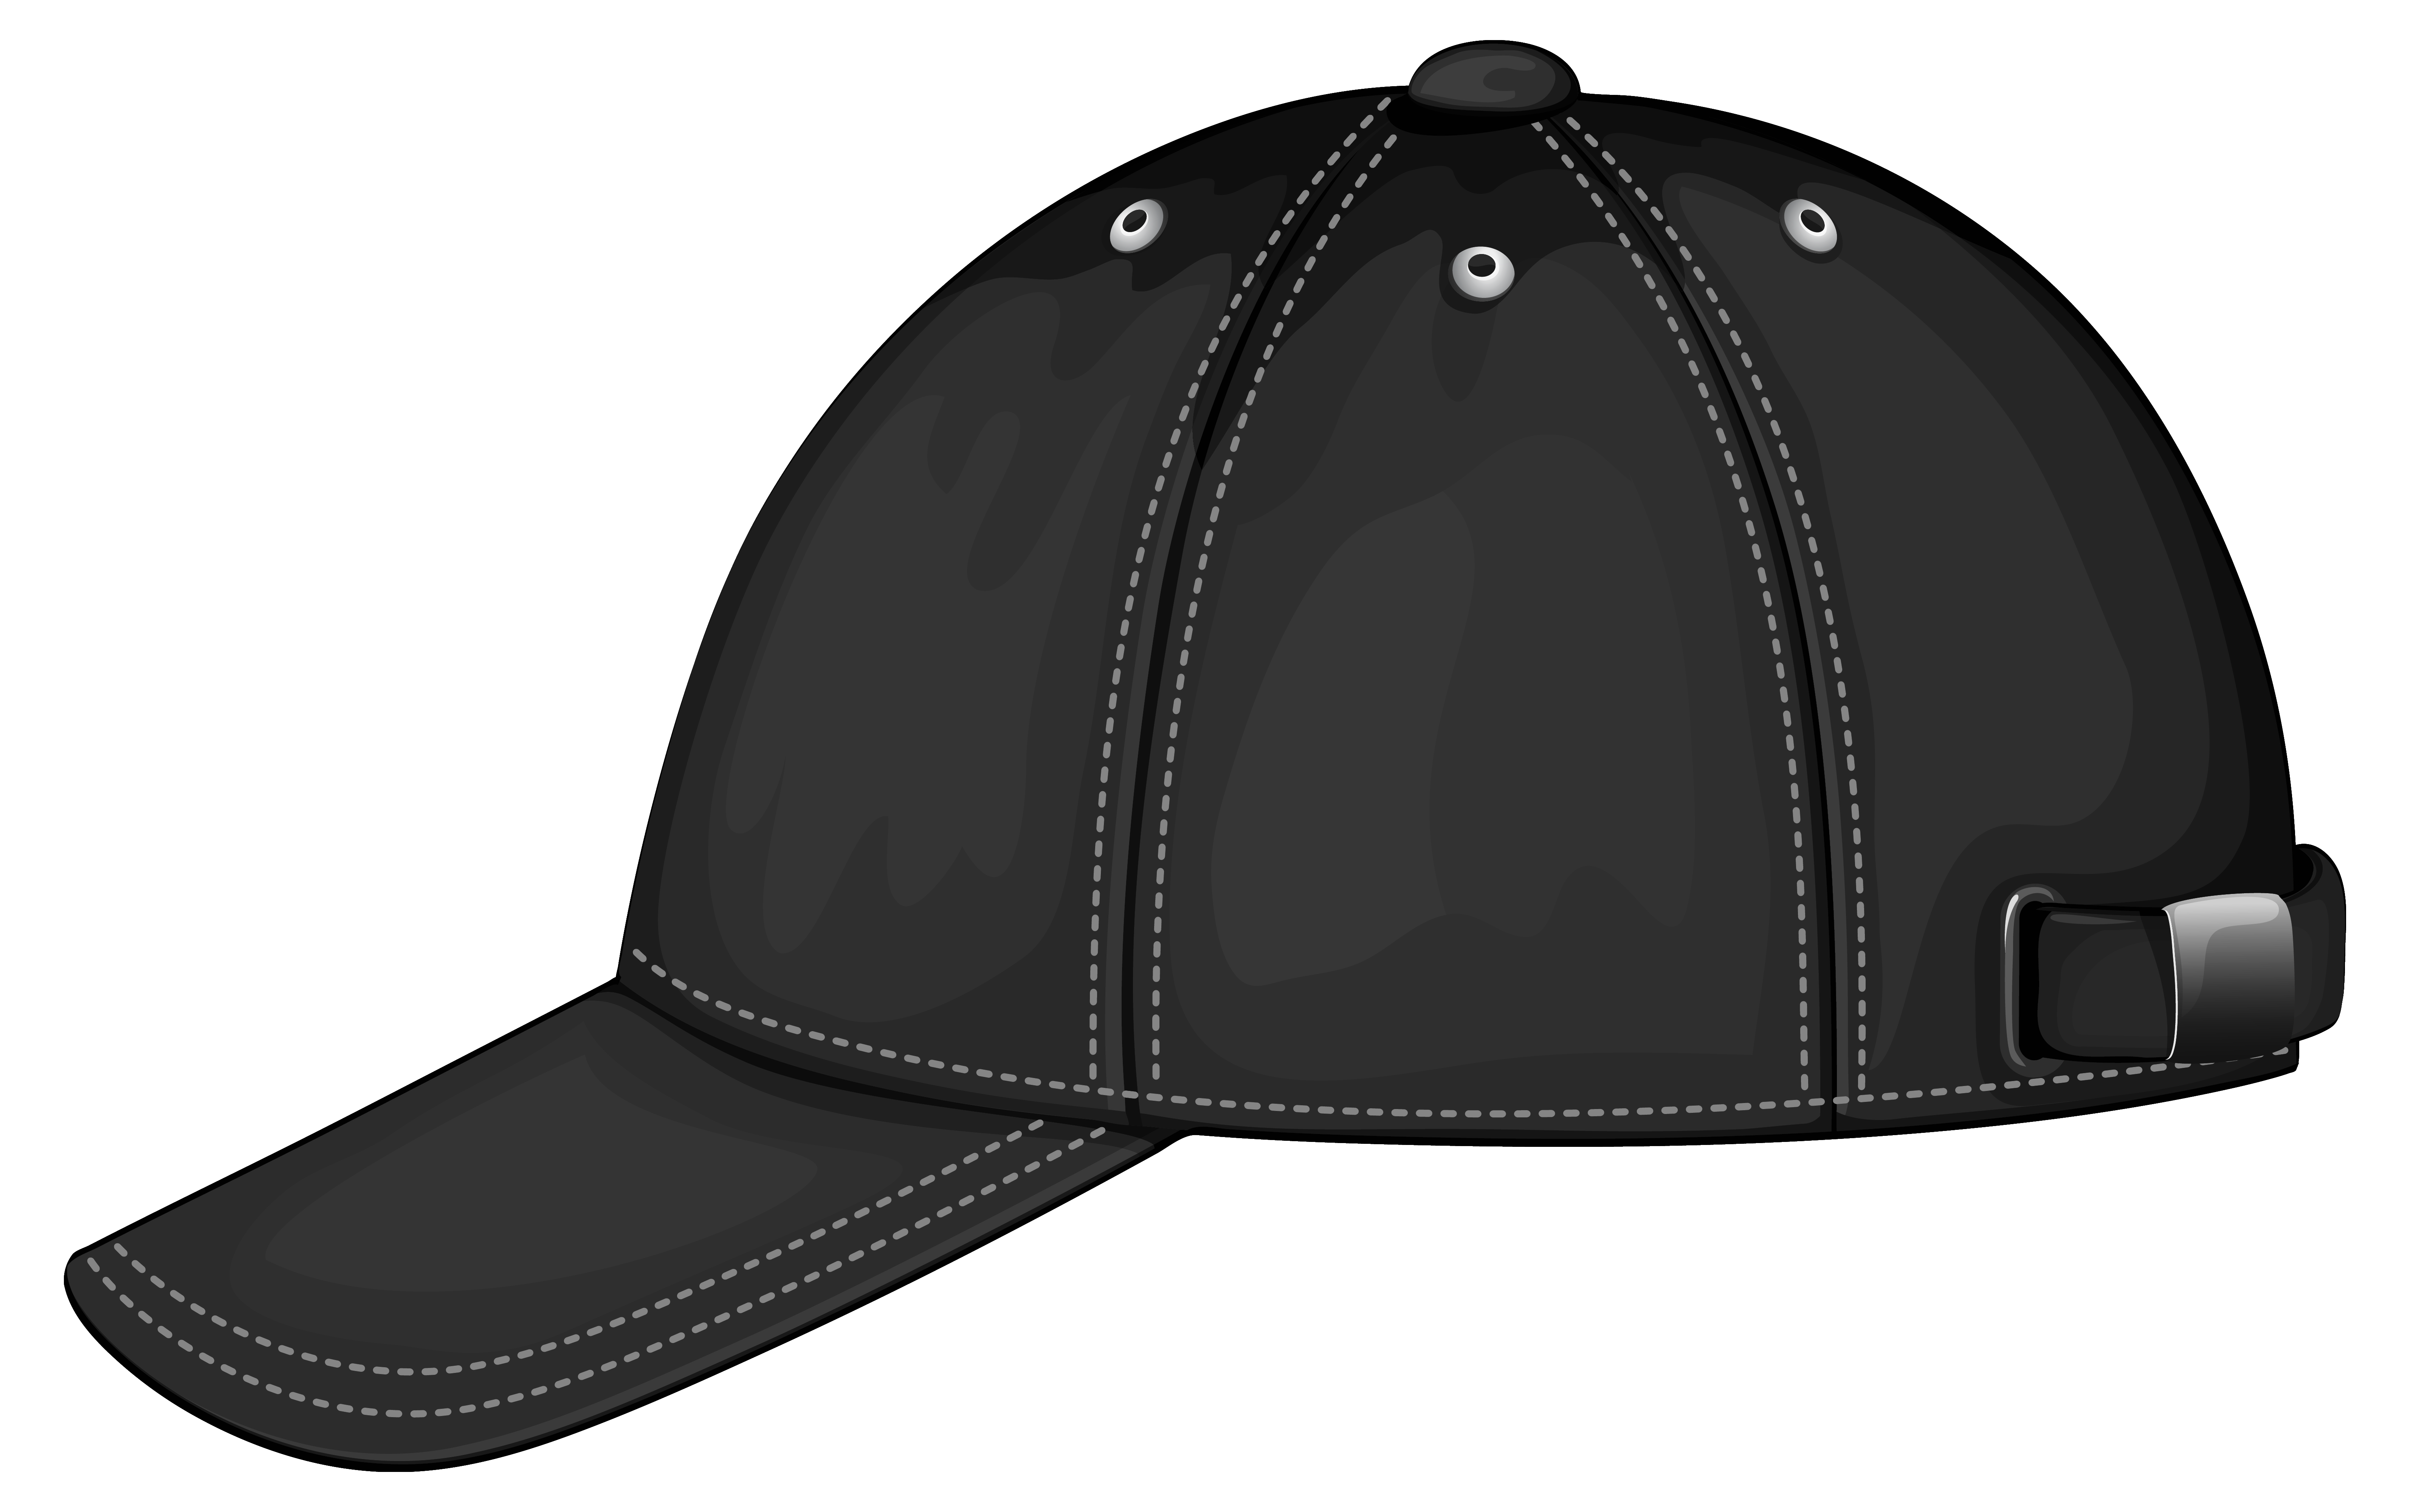 Clipart grass baseball. Black cap png image